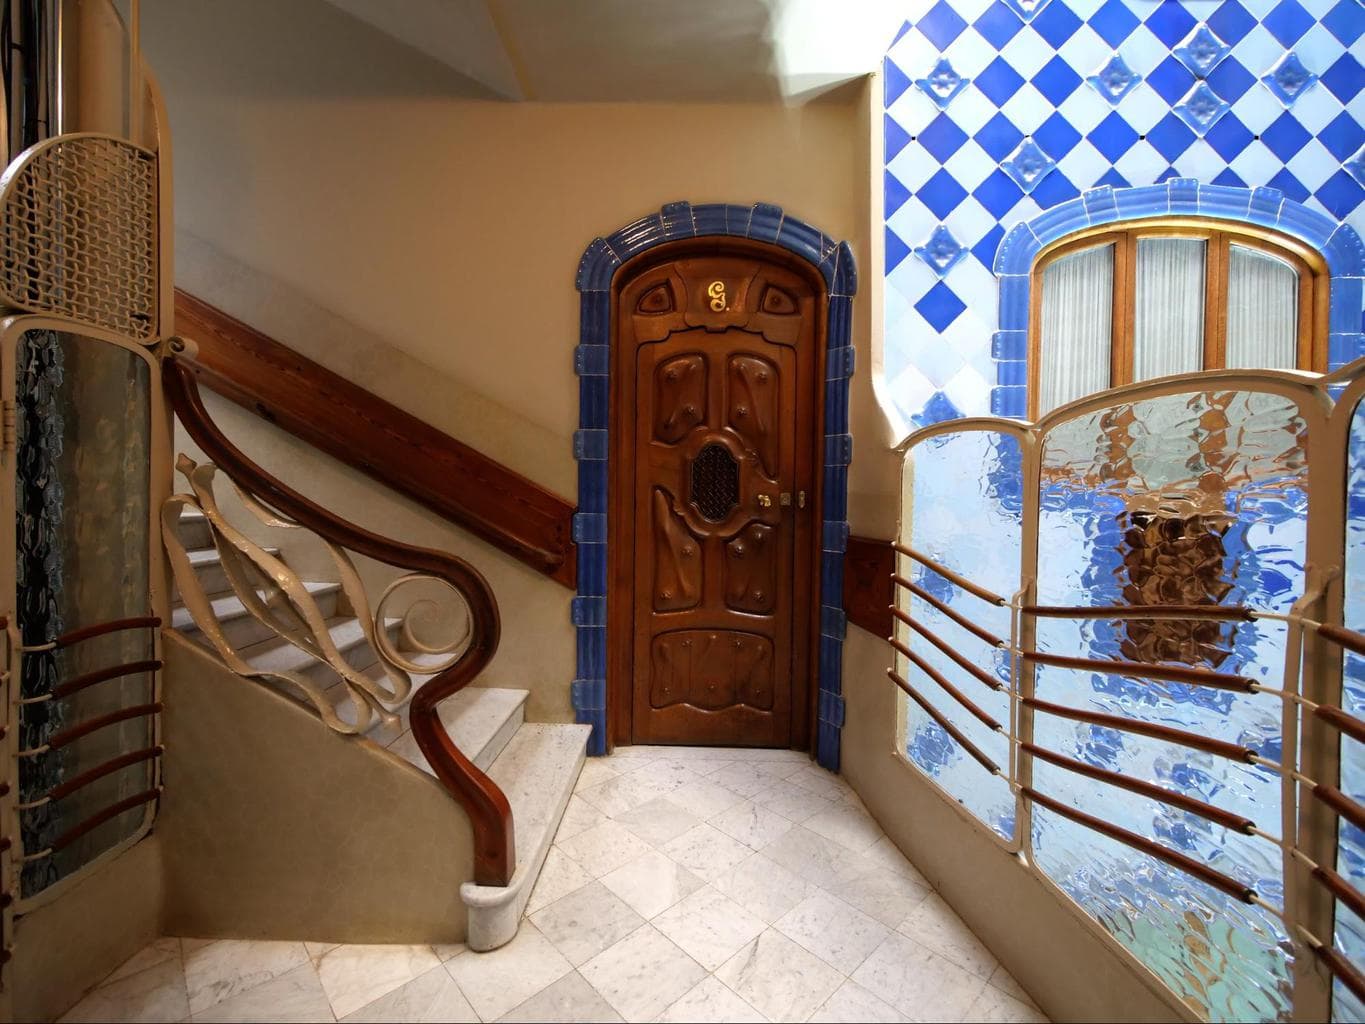 The stairs inside Casa Batlló